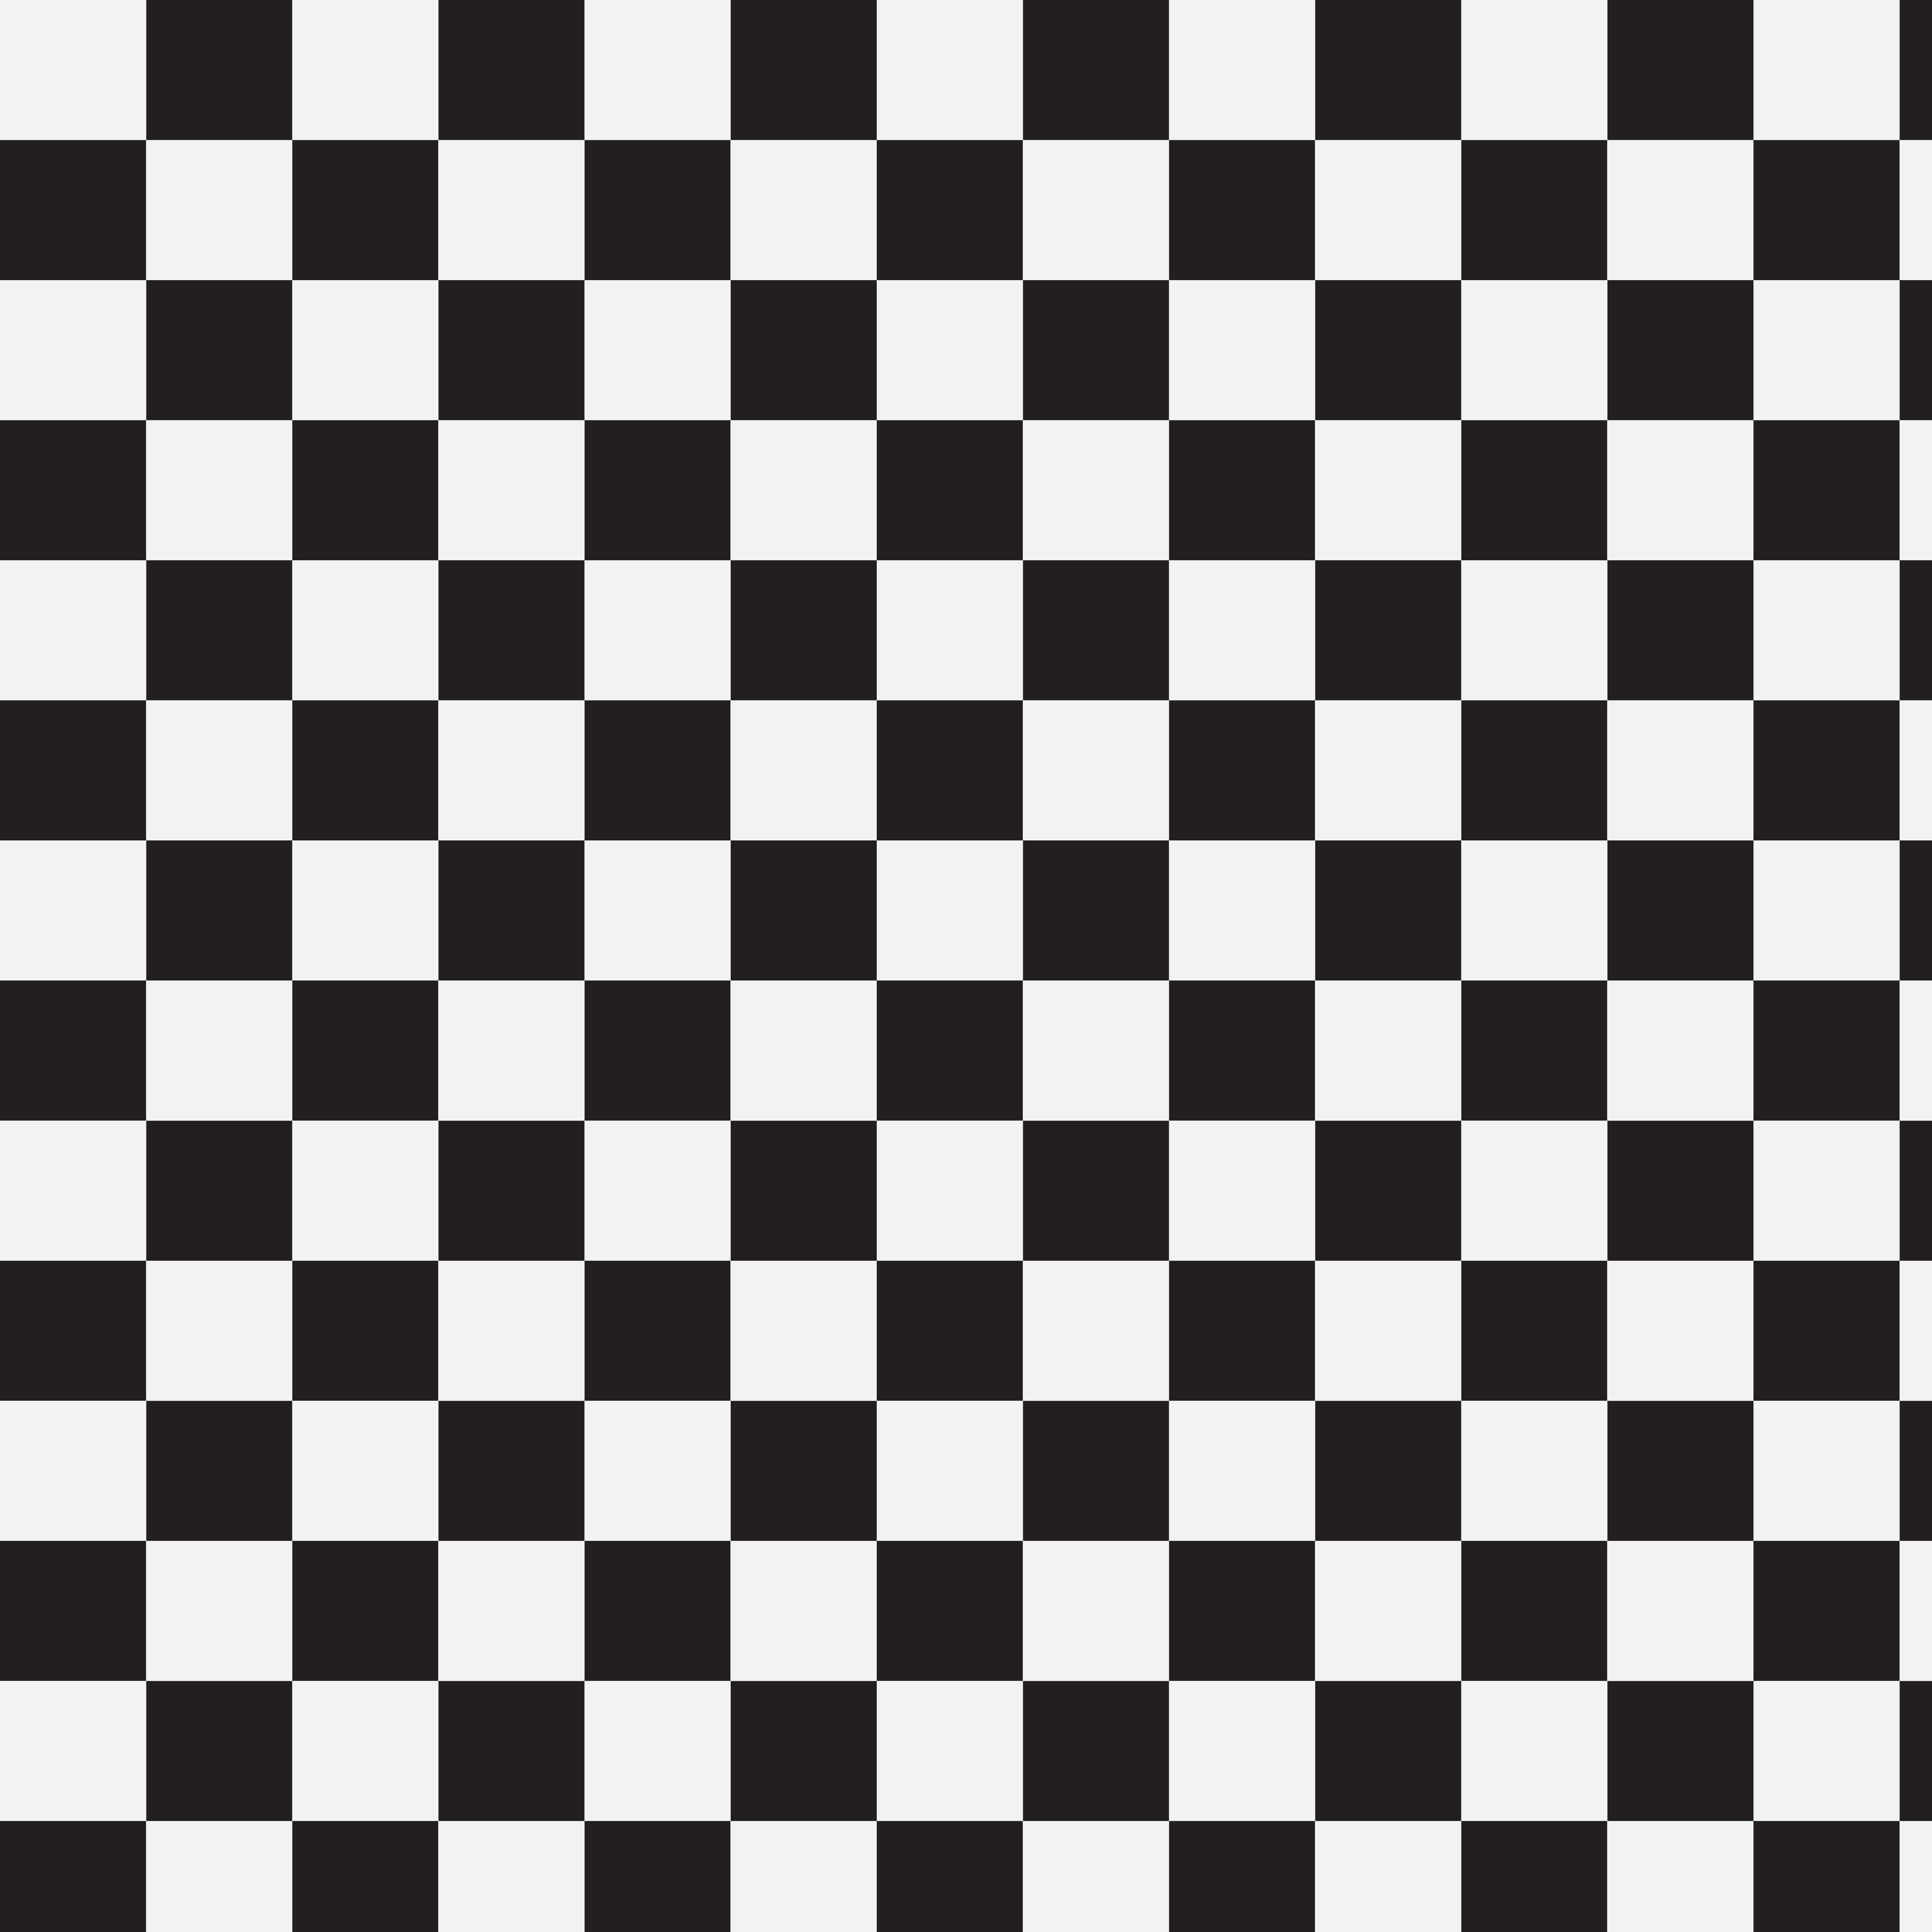 Шахматные квадратики. Черные и белые квадратики. Черно белые квадратики. Шахматная клетка. Белый квадратик.